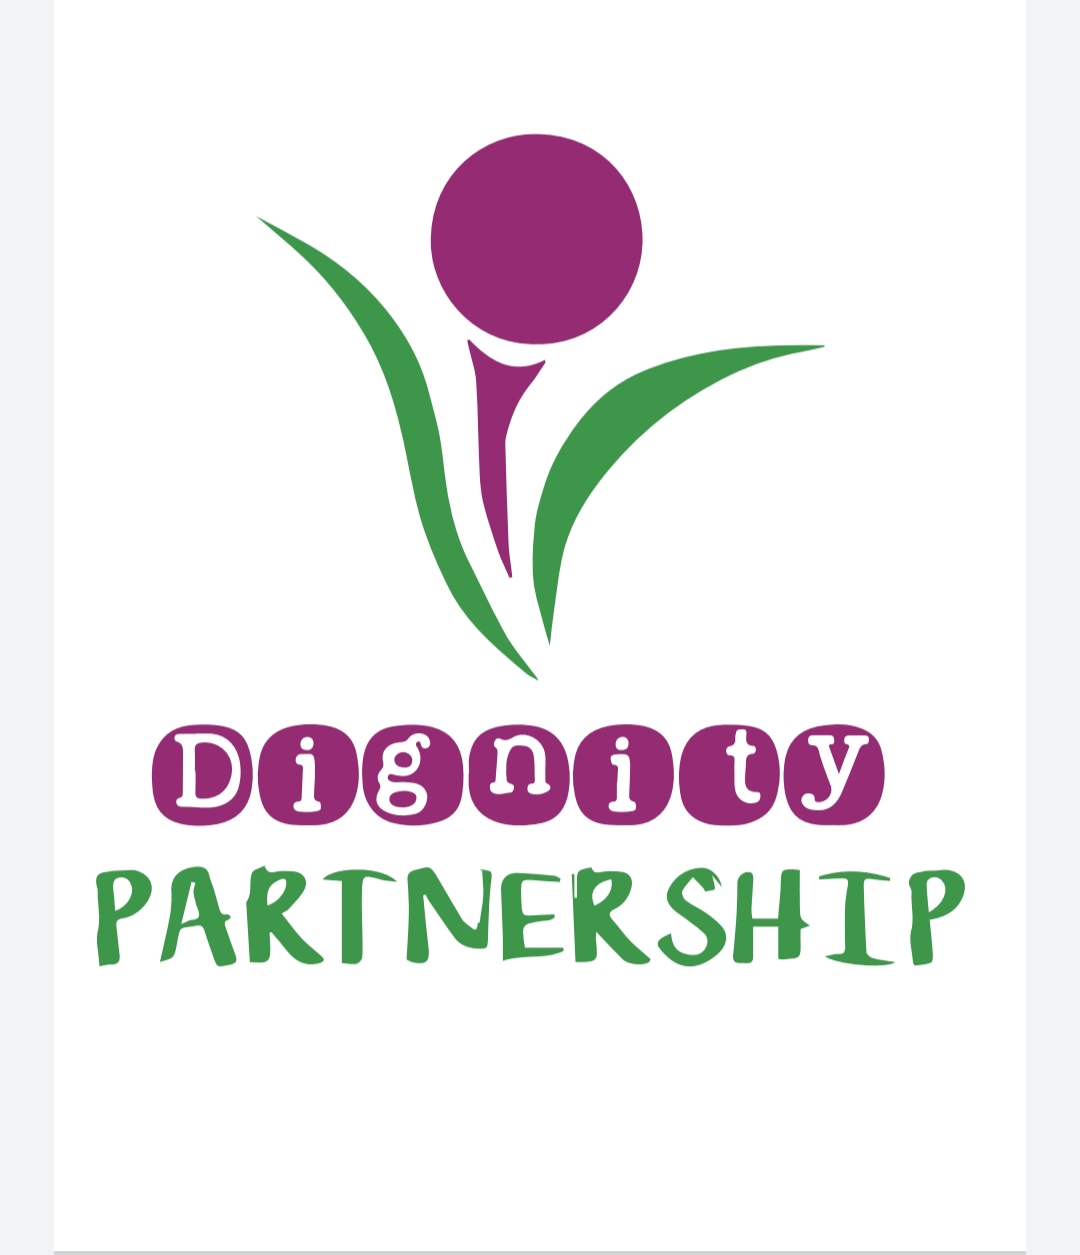 Dignity Partnership